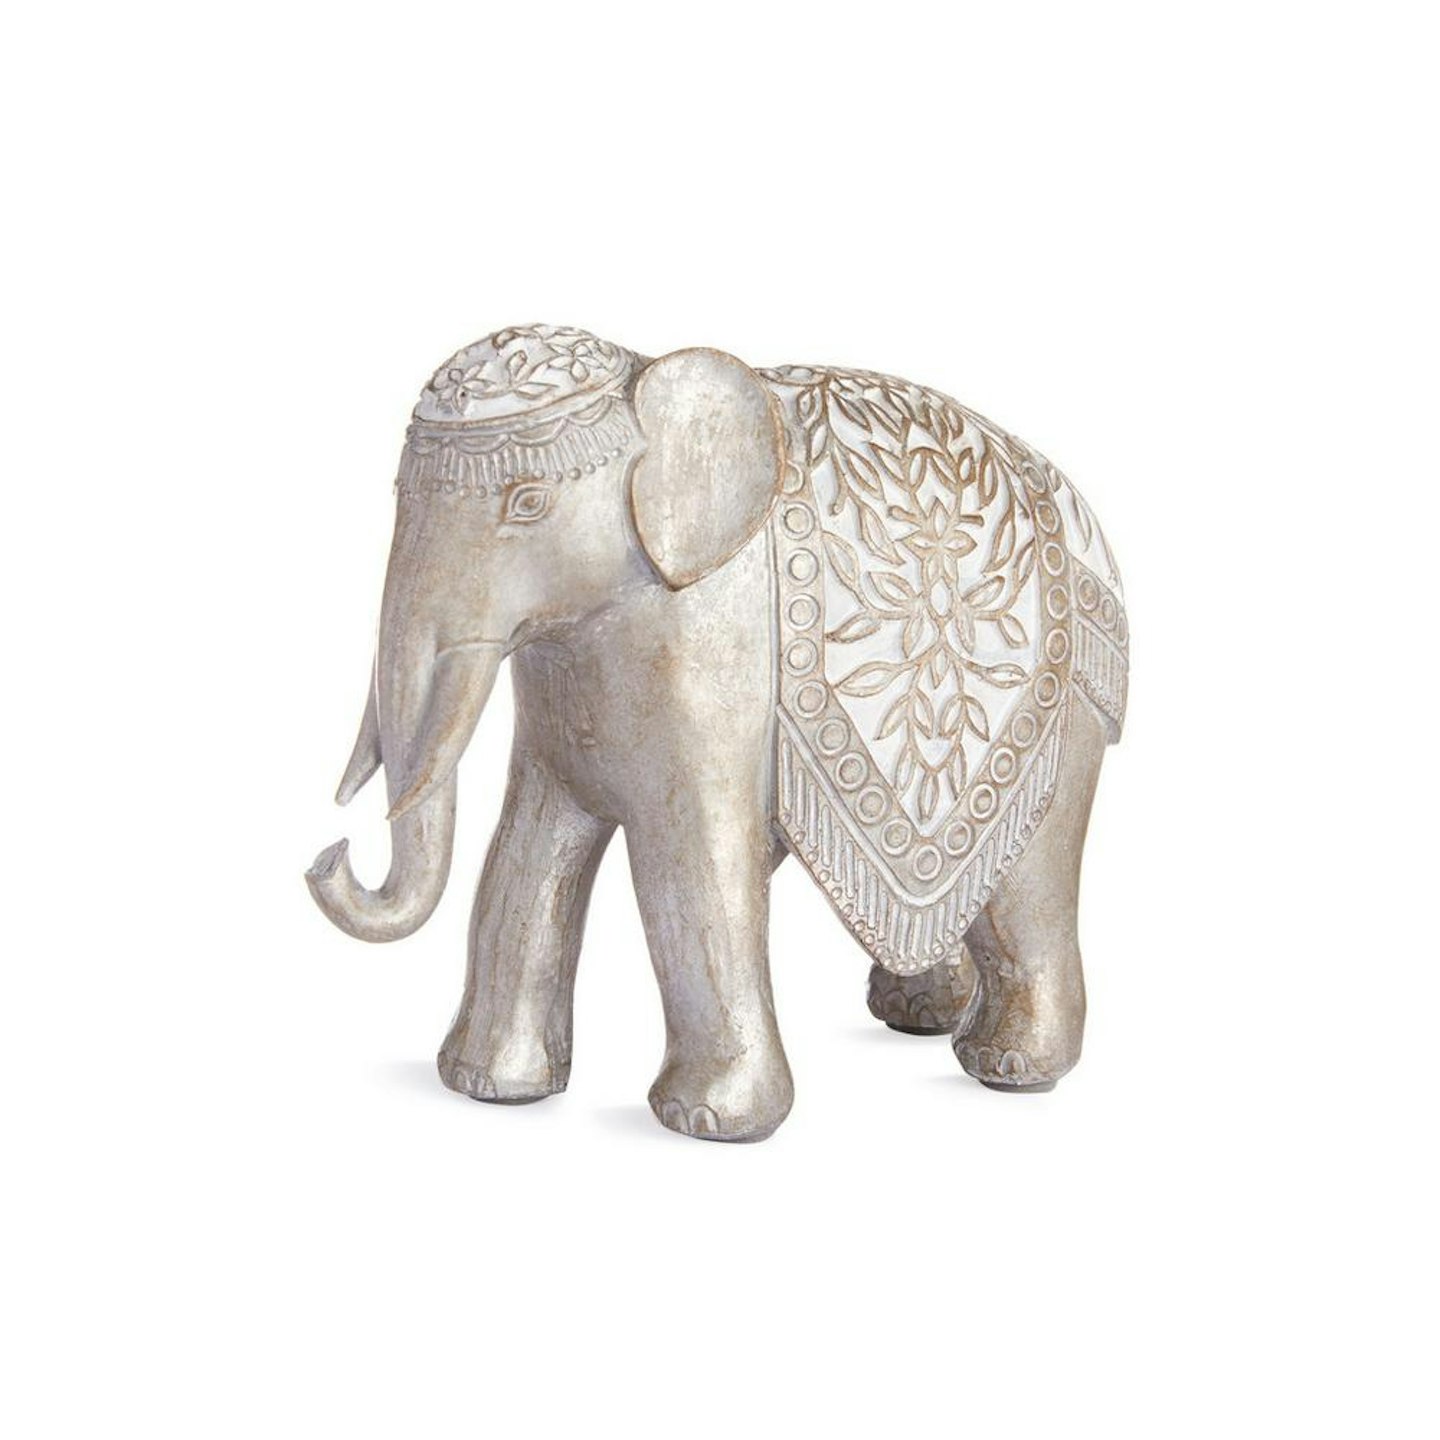 Small Elephant Ornament £3.50